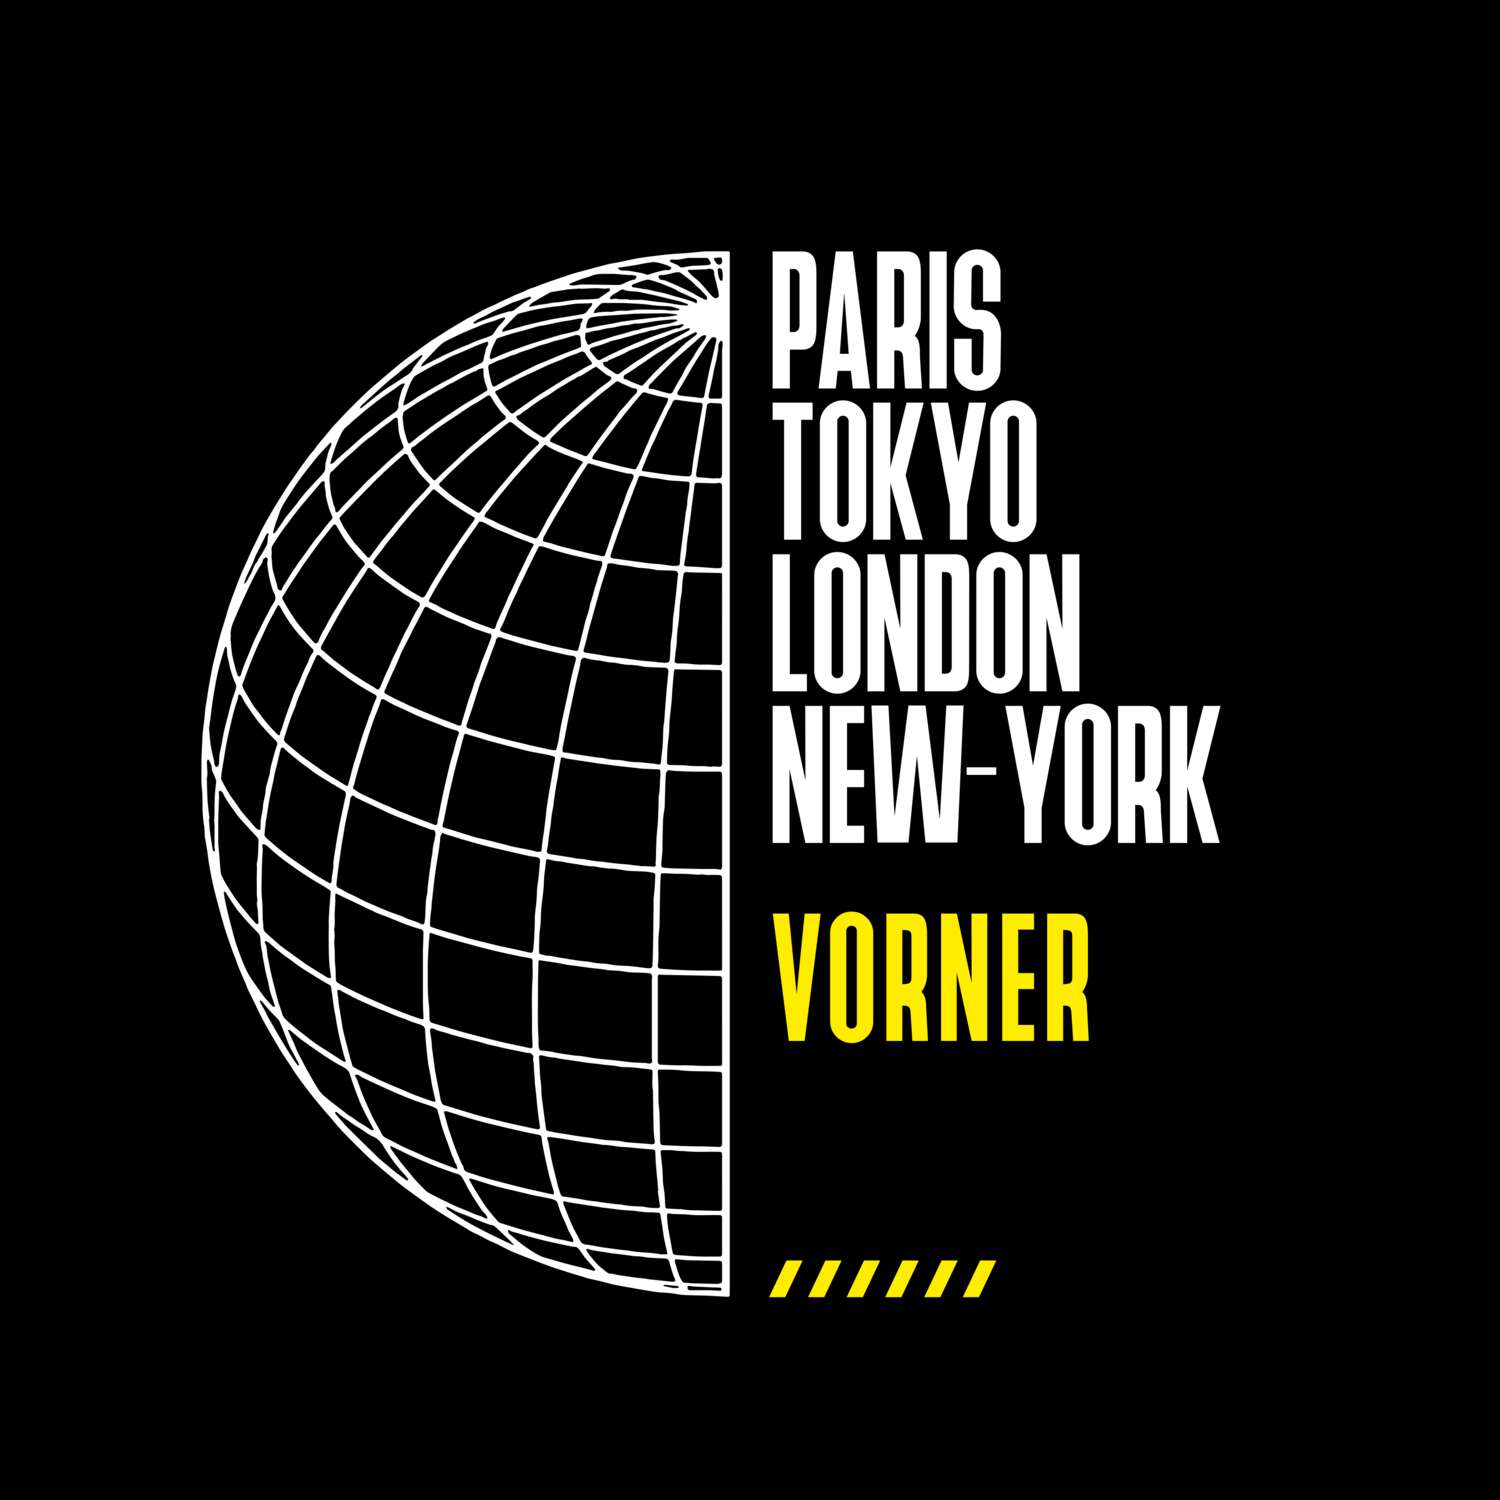 Vorner T-Shirt »Paris Tokyo London«